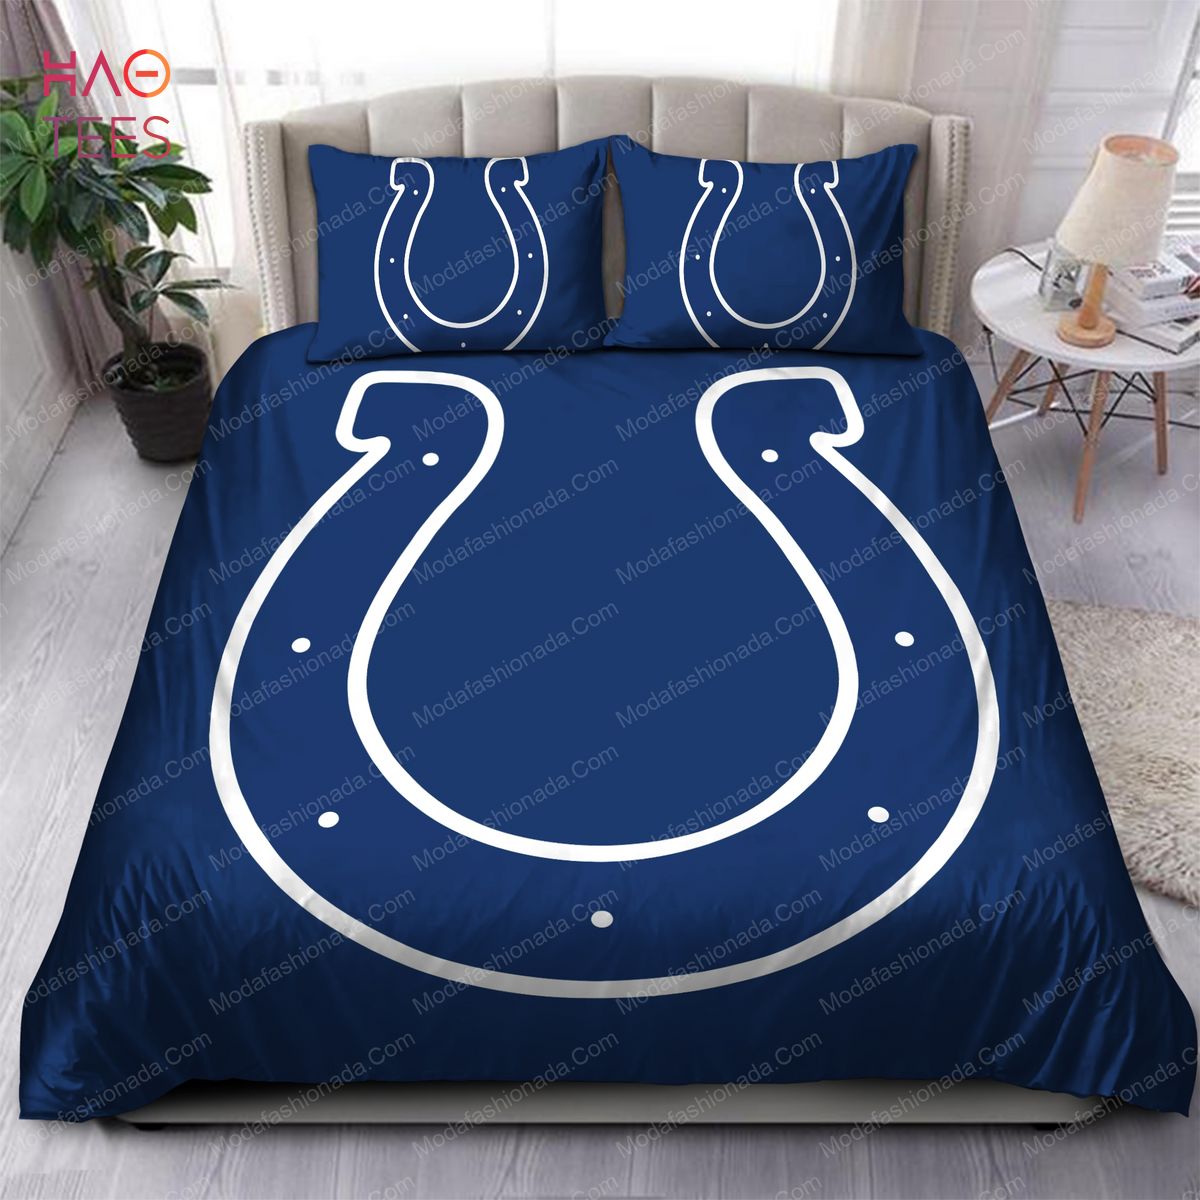 Indianapolis Colts Logo Bedding Sets